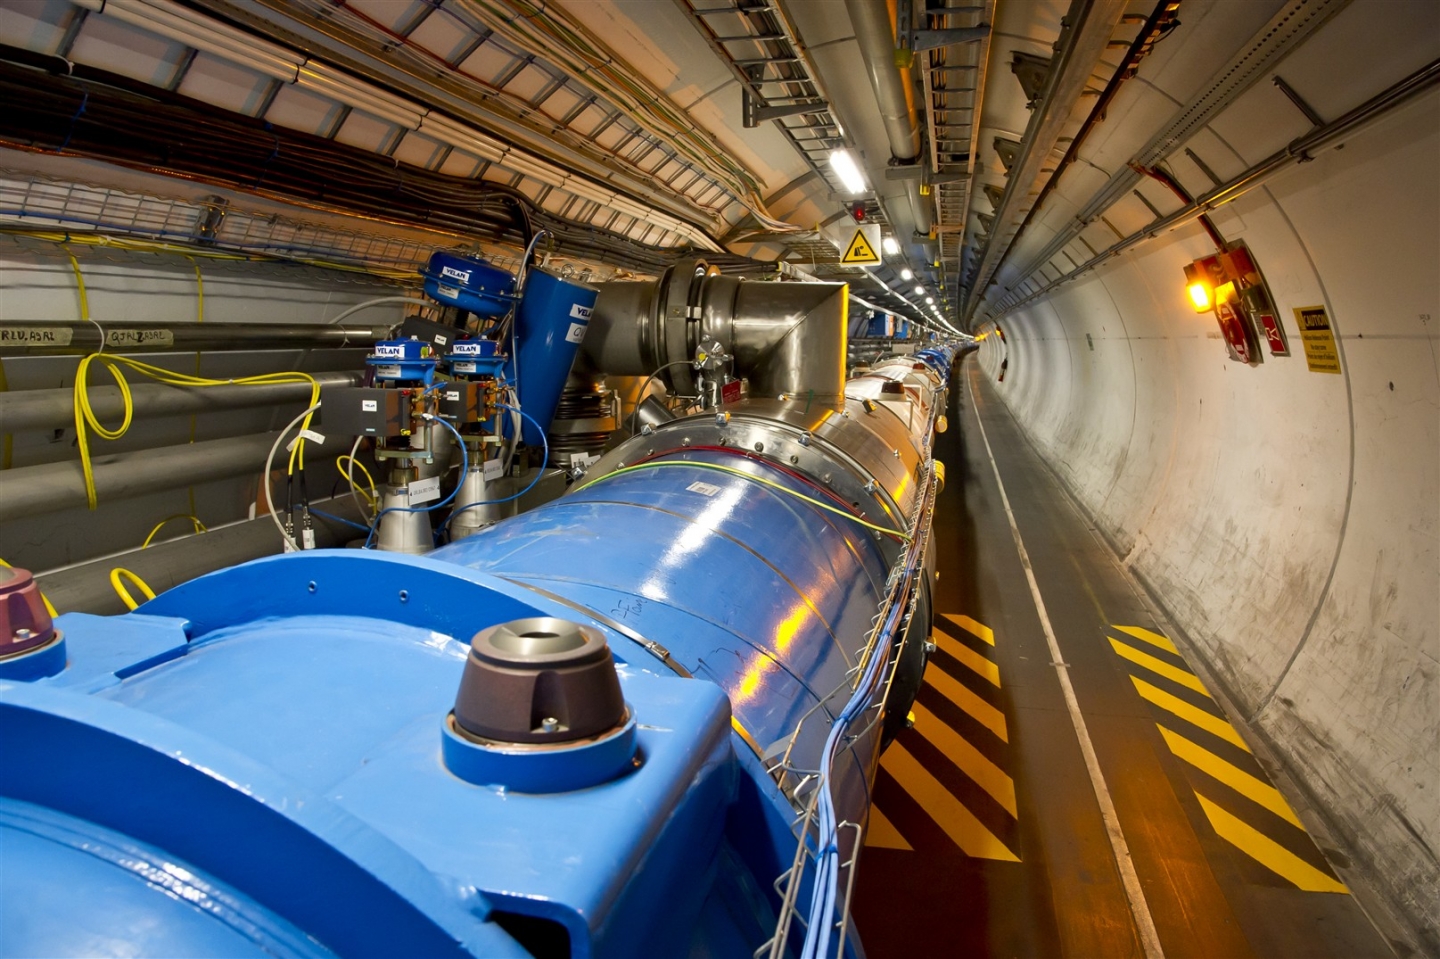 The LHC racks up records